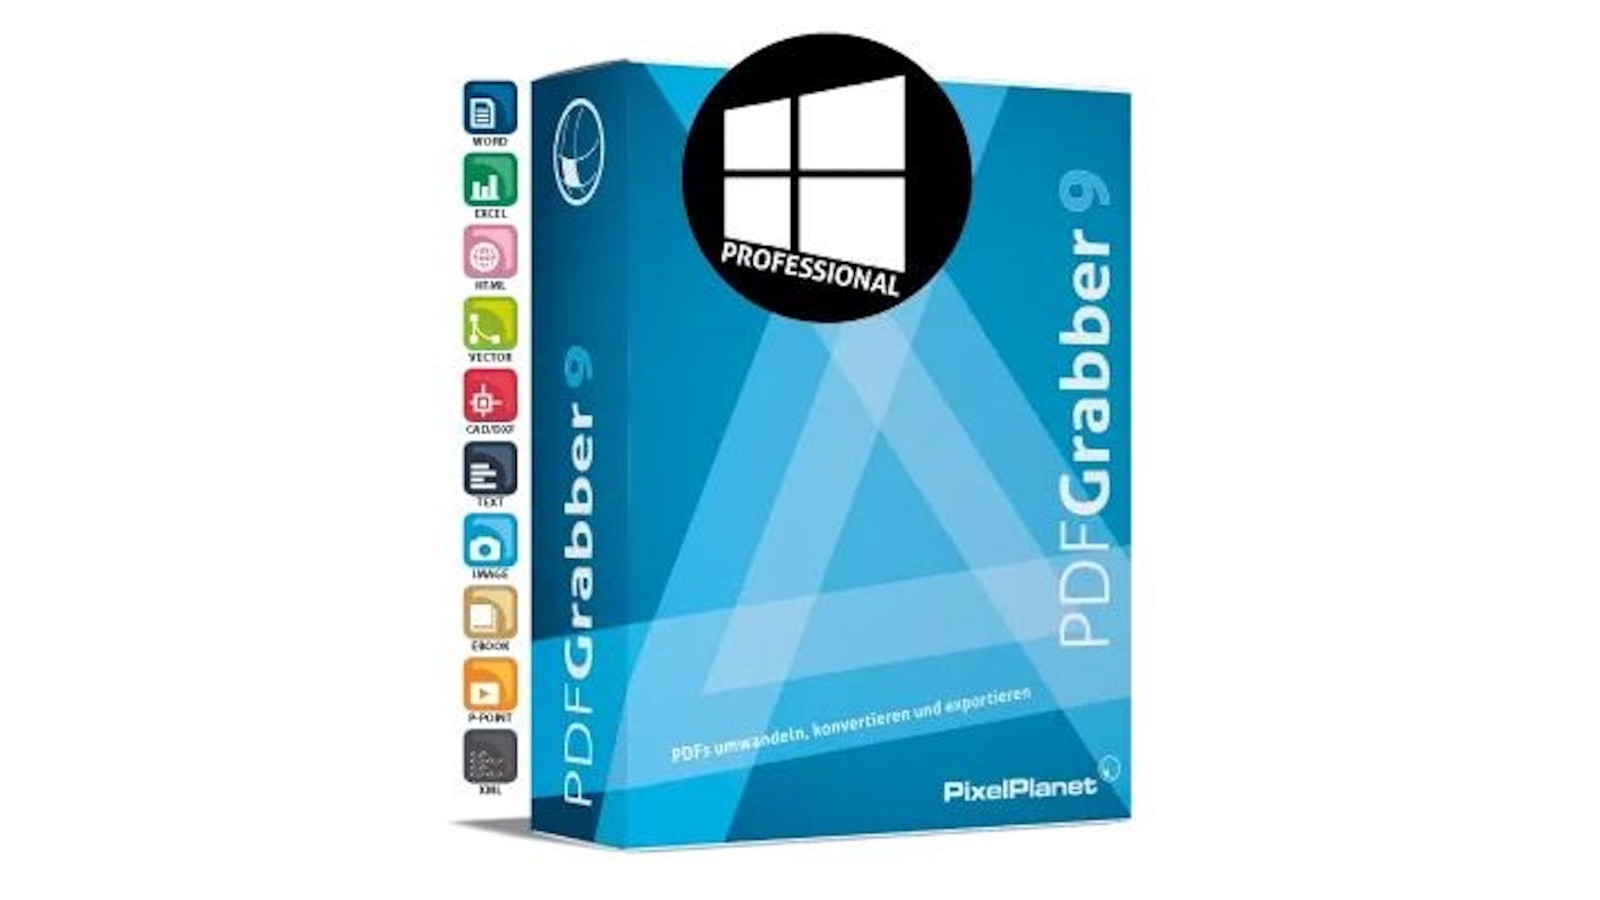 PixelPlanet PdfGrabber 9 Professional Network Licence Key (Lifetime / 5 Users) 7.74 $